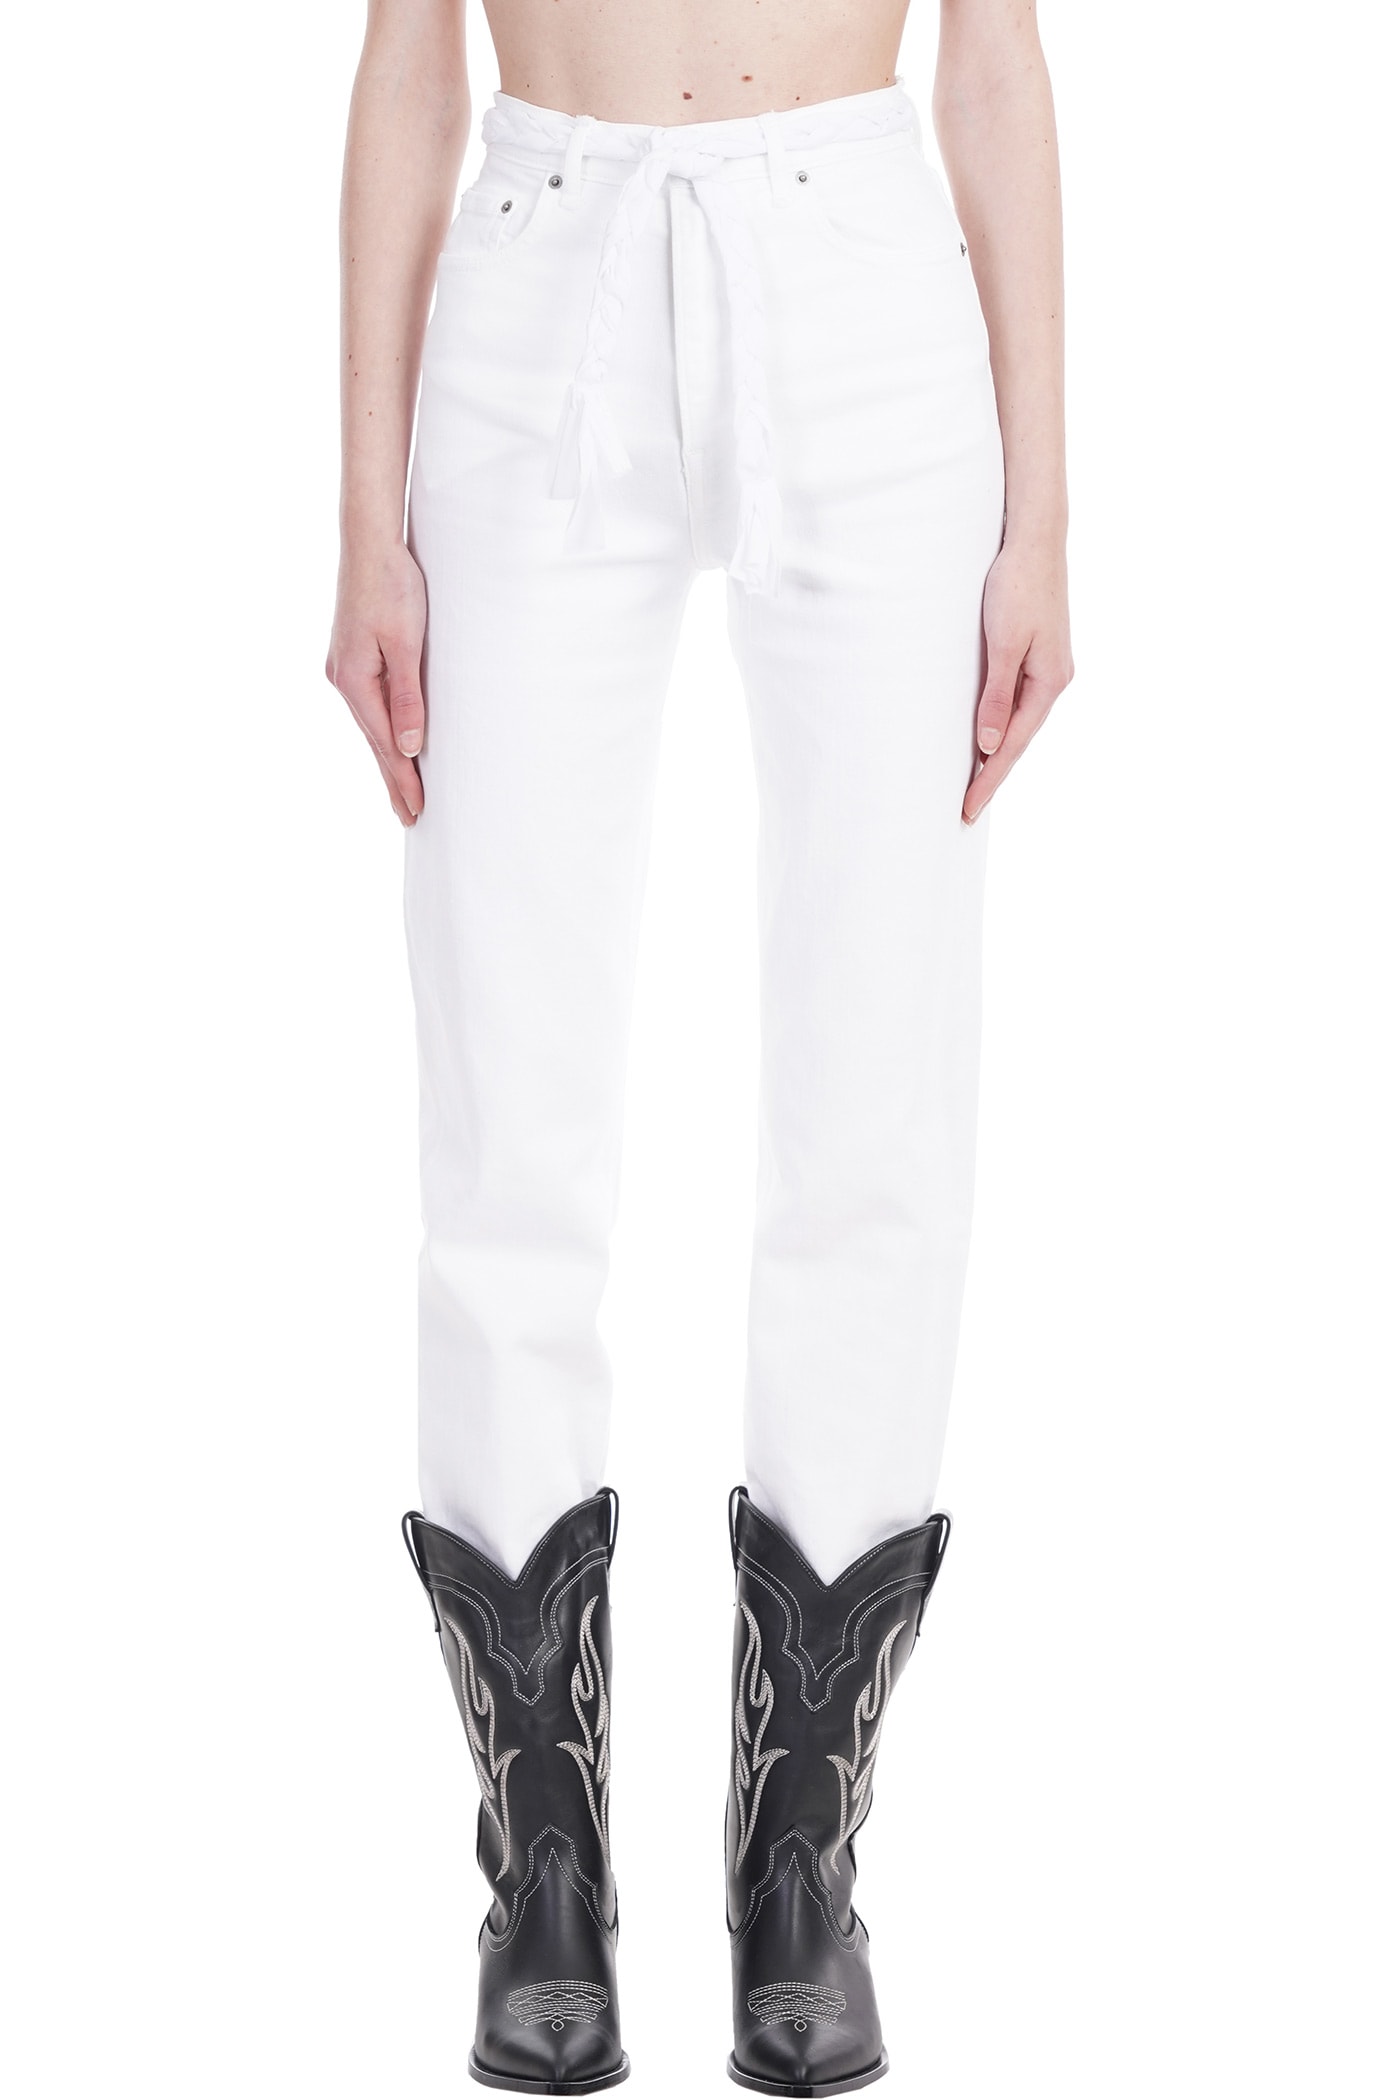 Haikure Virginia Jeans In White Cotton